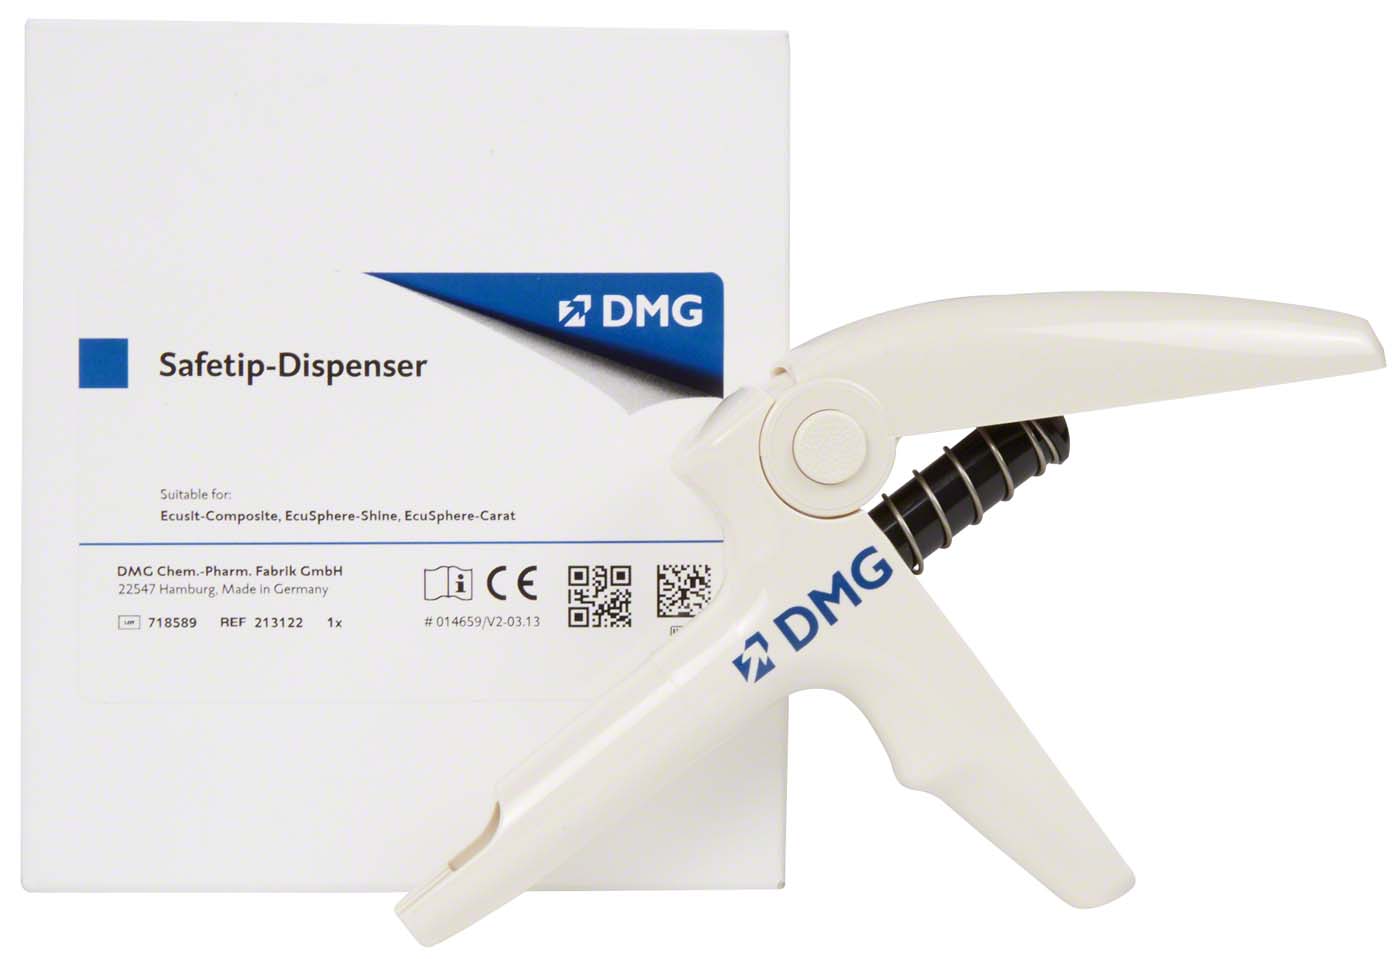 Safetip-Dispenser DMG